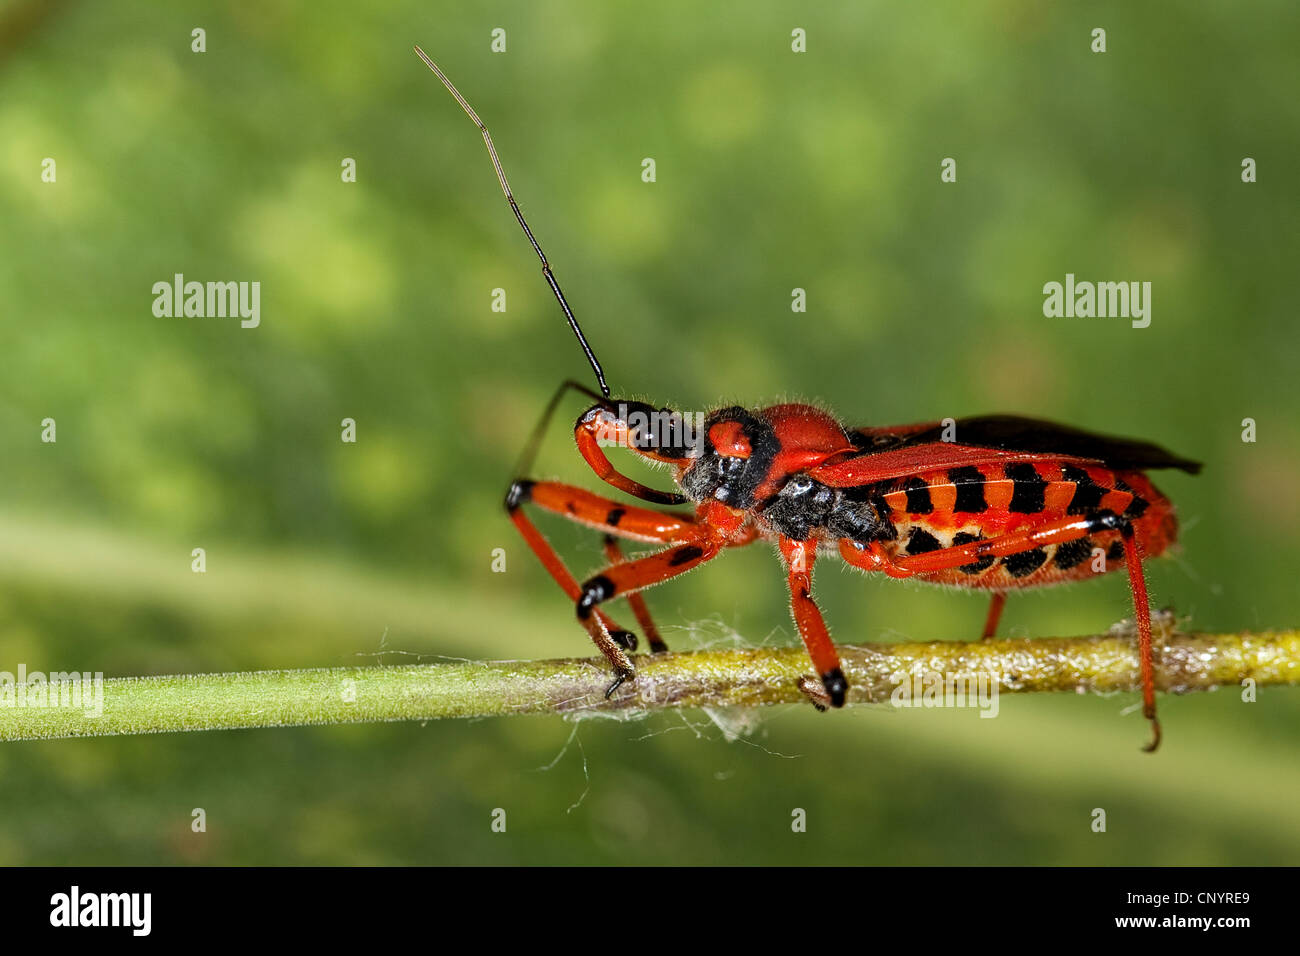 Red assassin bug (Rhinocoris iracundus, Rhynocoris iracundus), sitting on a sprout, Germany Stock Photo